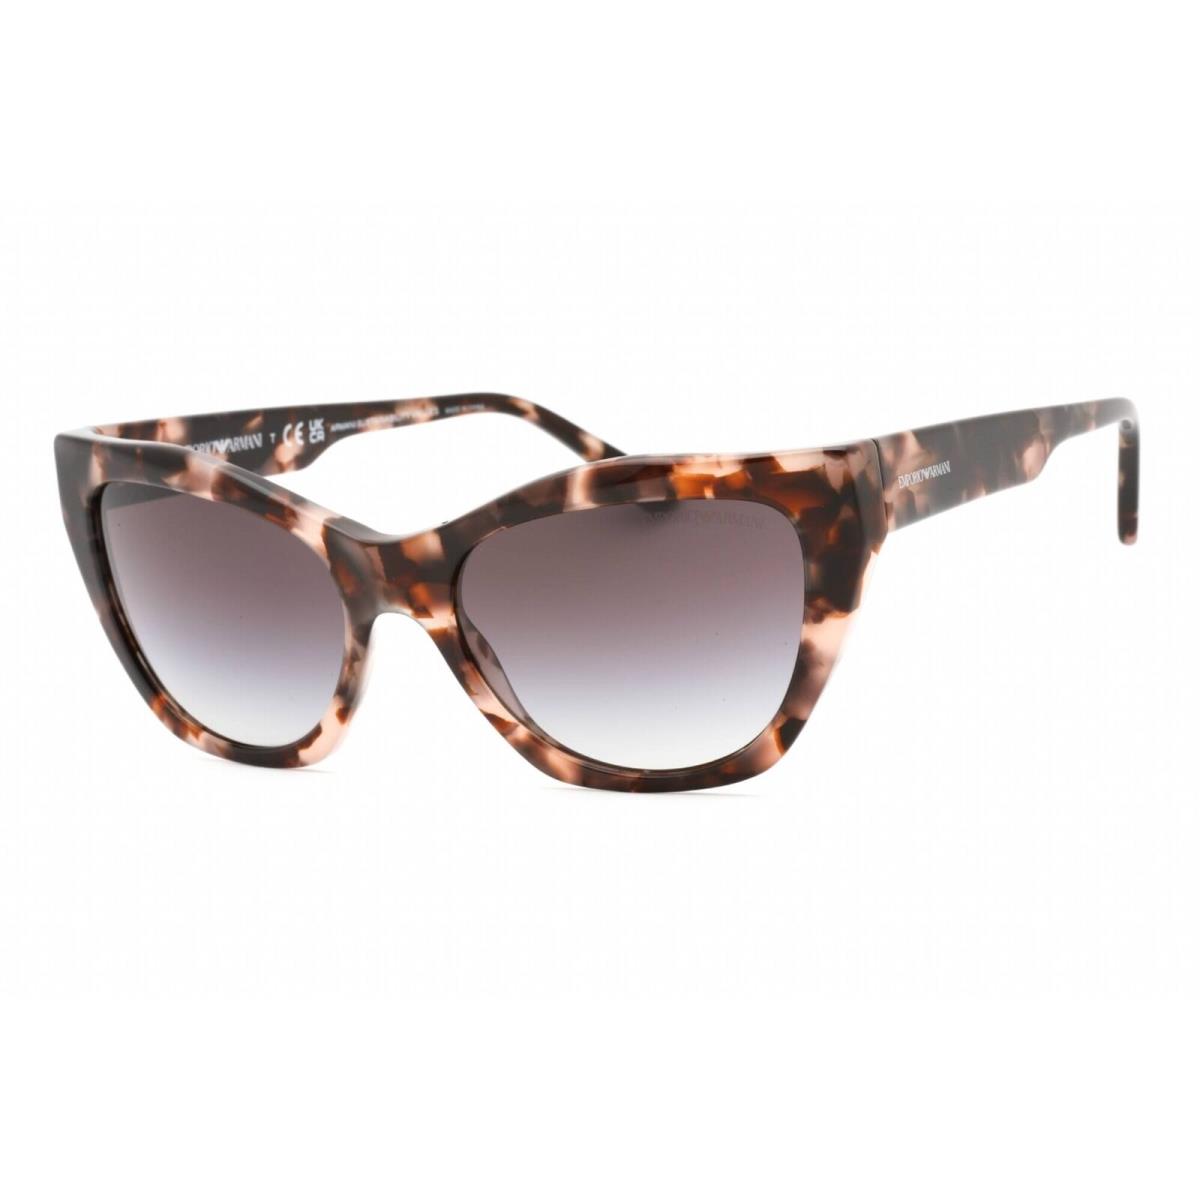 Emporio Armani Women`s Sunglasses Shiny Pink Havana Plastic Frame 0EA4176 54108G